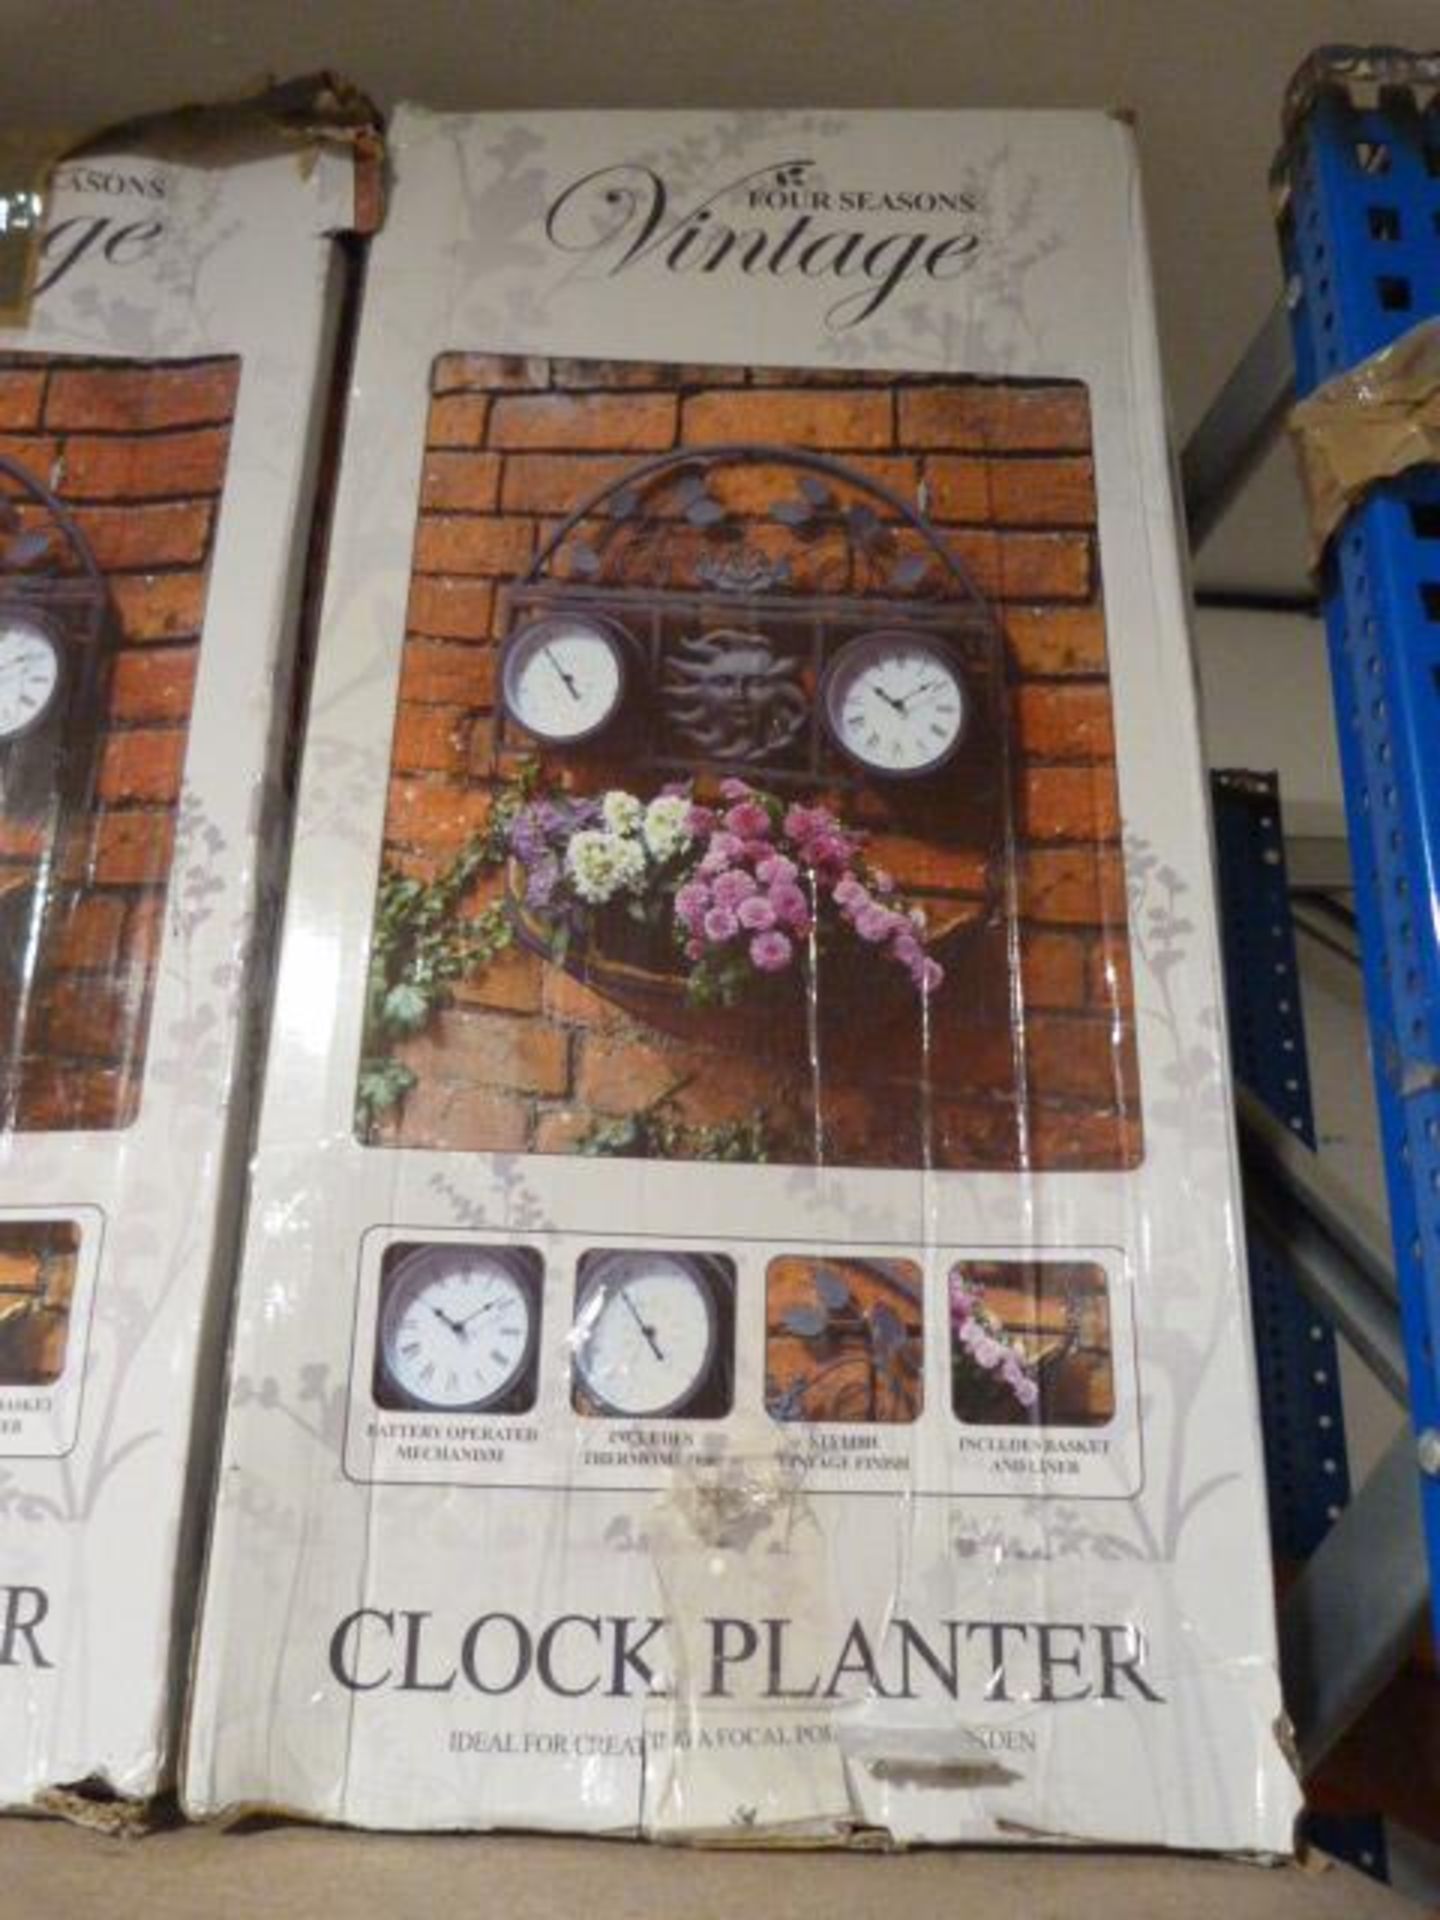 *Four Seasons Vintage Clock Planter